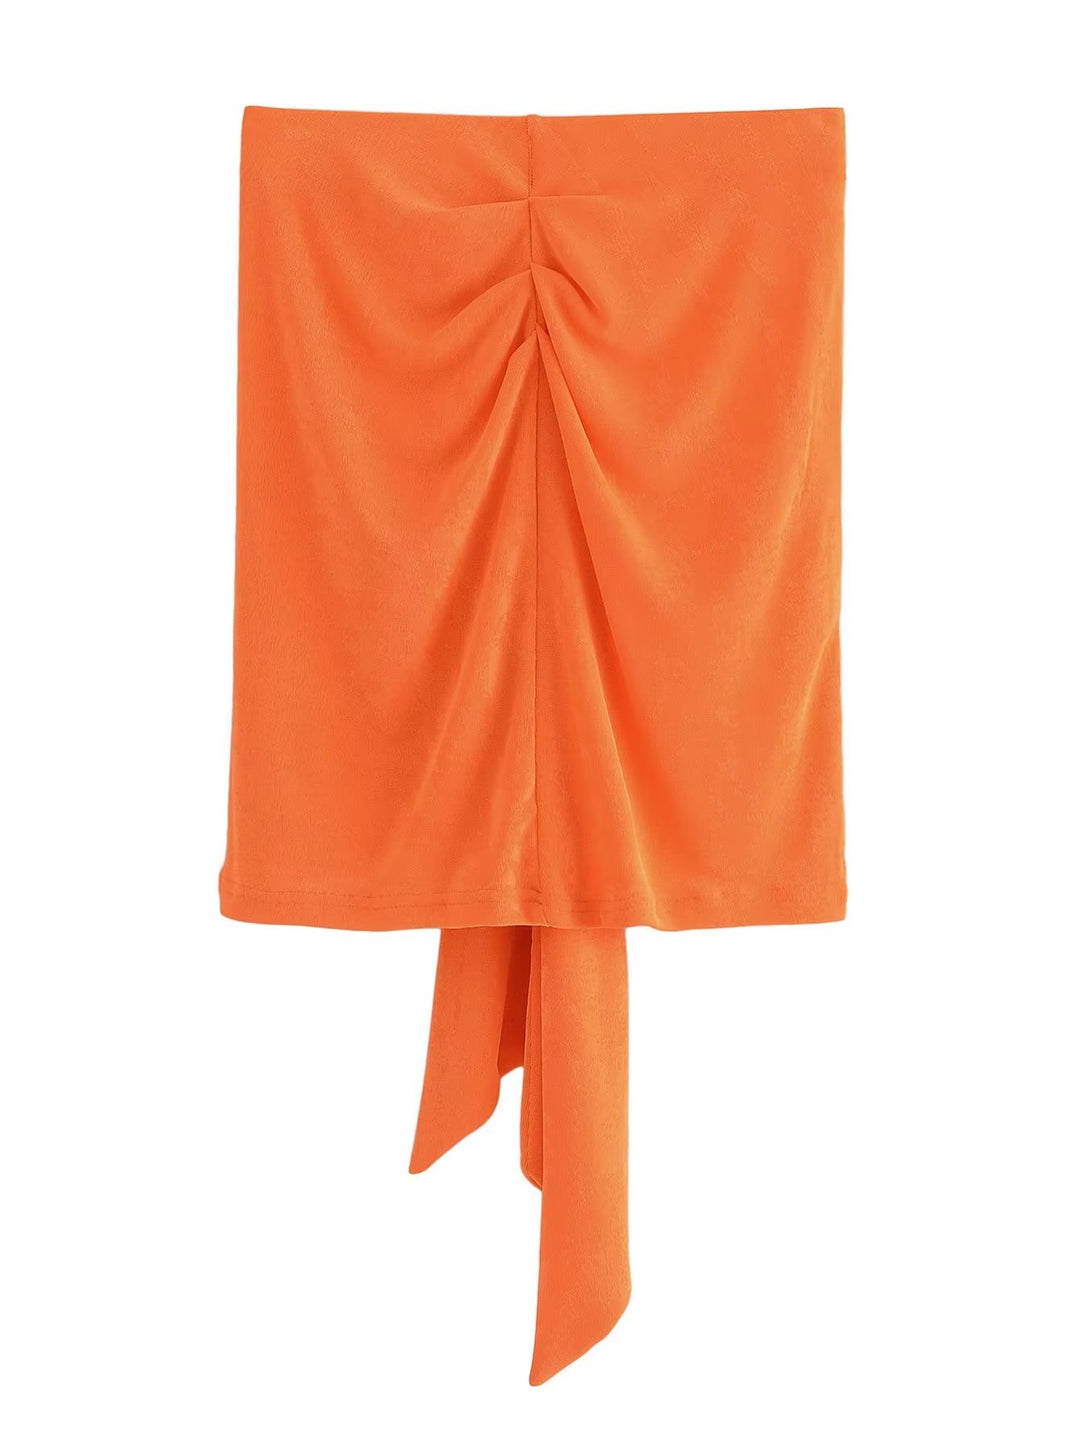 Women Wear Orange Knitted High Waist Bow Tie Mini Skirt Wild Casual